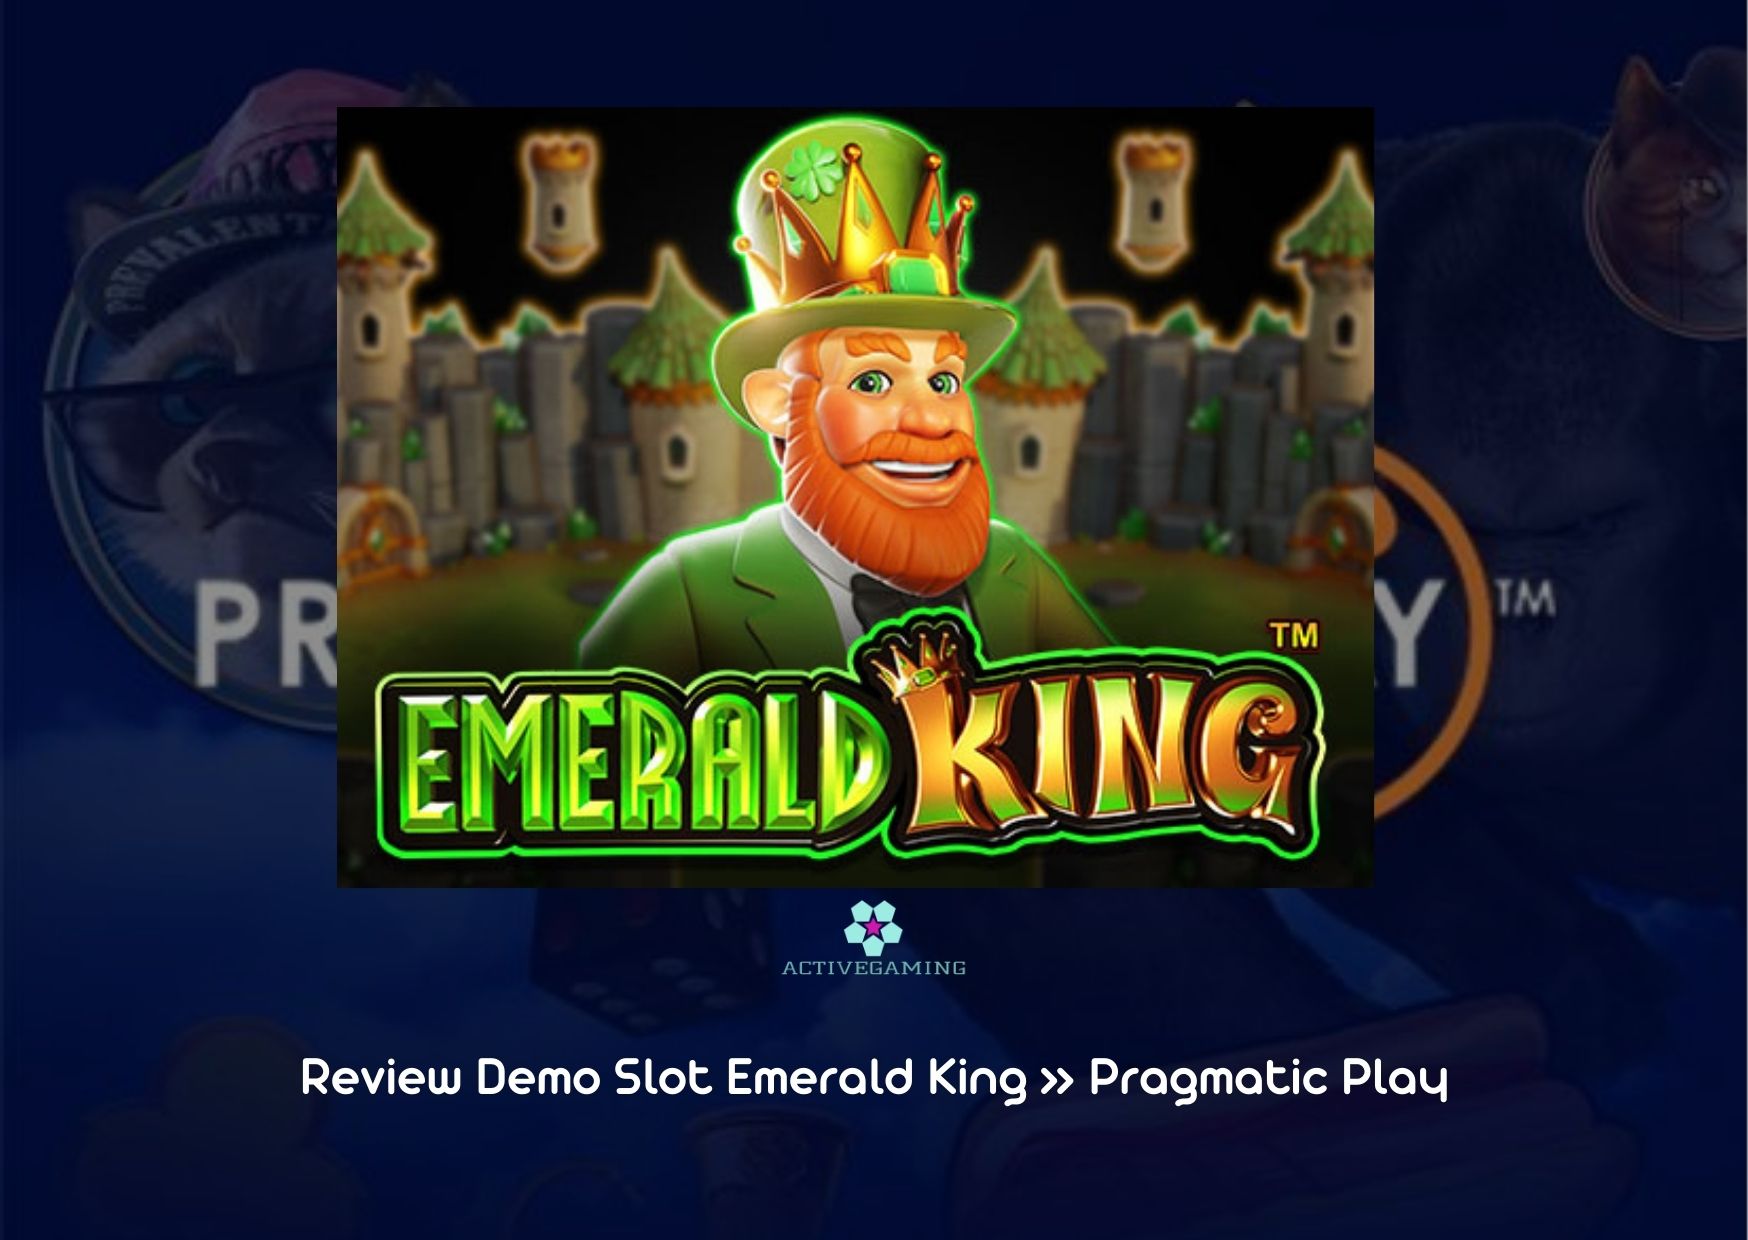 Review Demo Slot Emerald King » Pragmatic Play